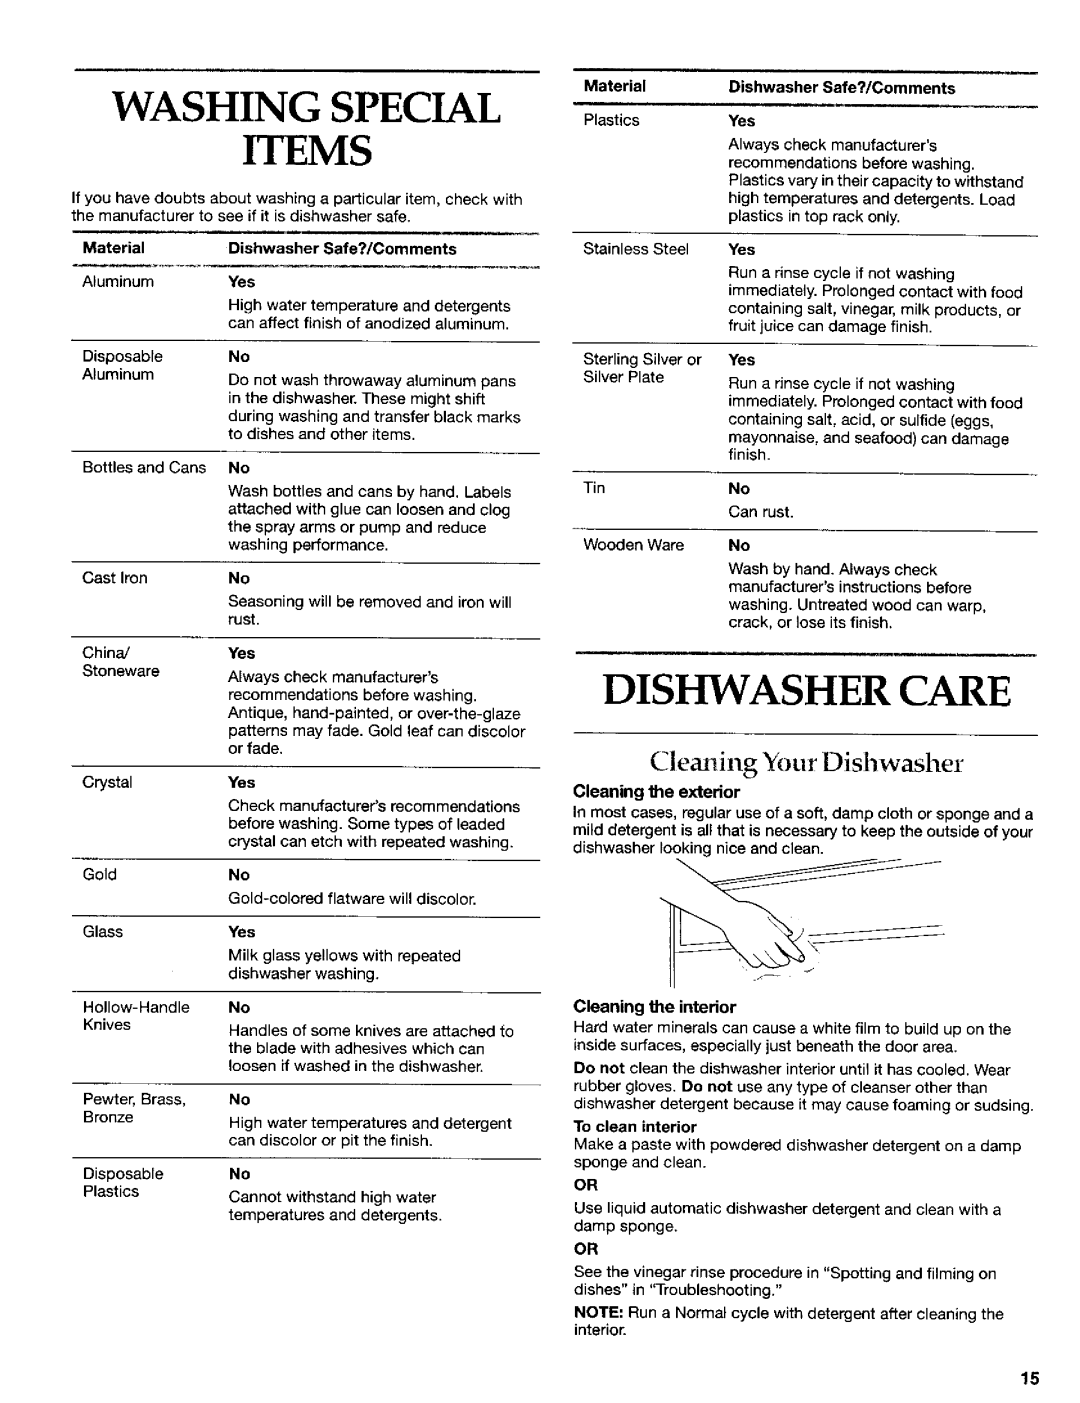 KitchenAid 8269909 manual Washing Special Items, Dishwasher Care, Cleaning Your Dishwasher 